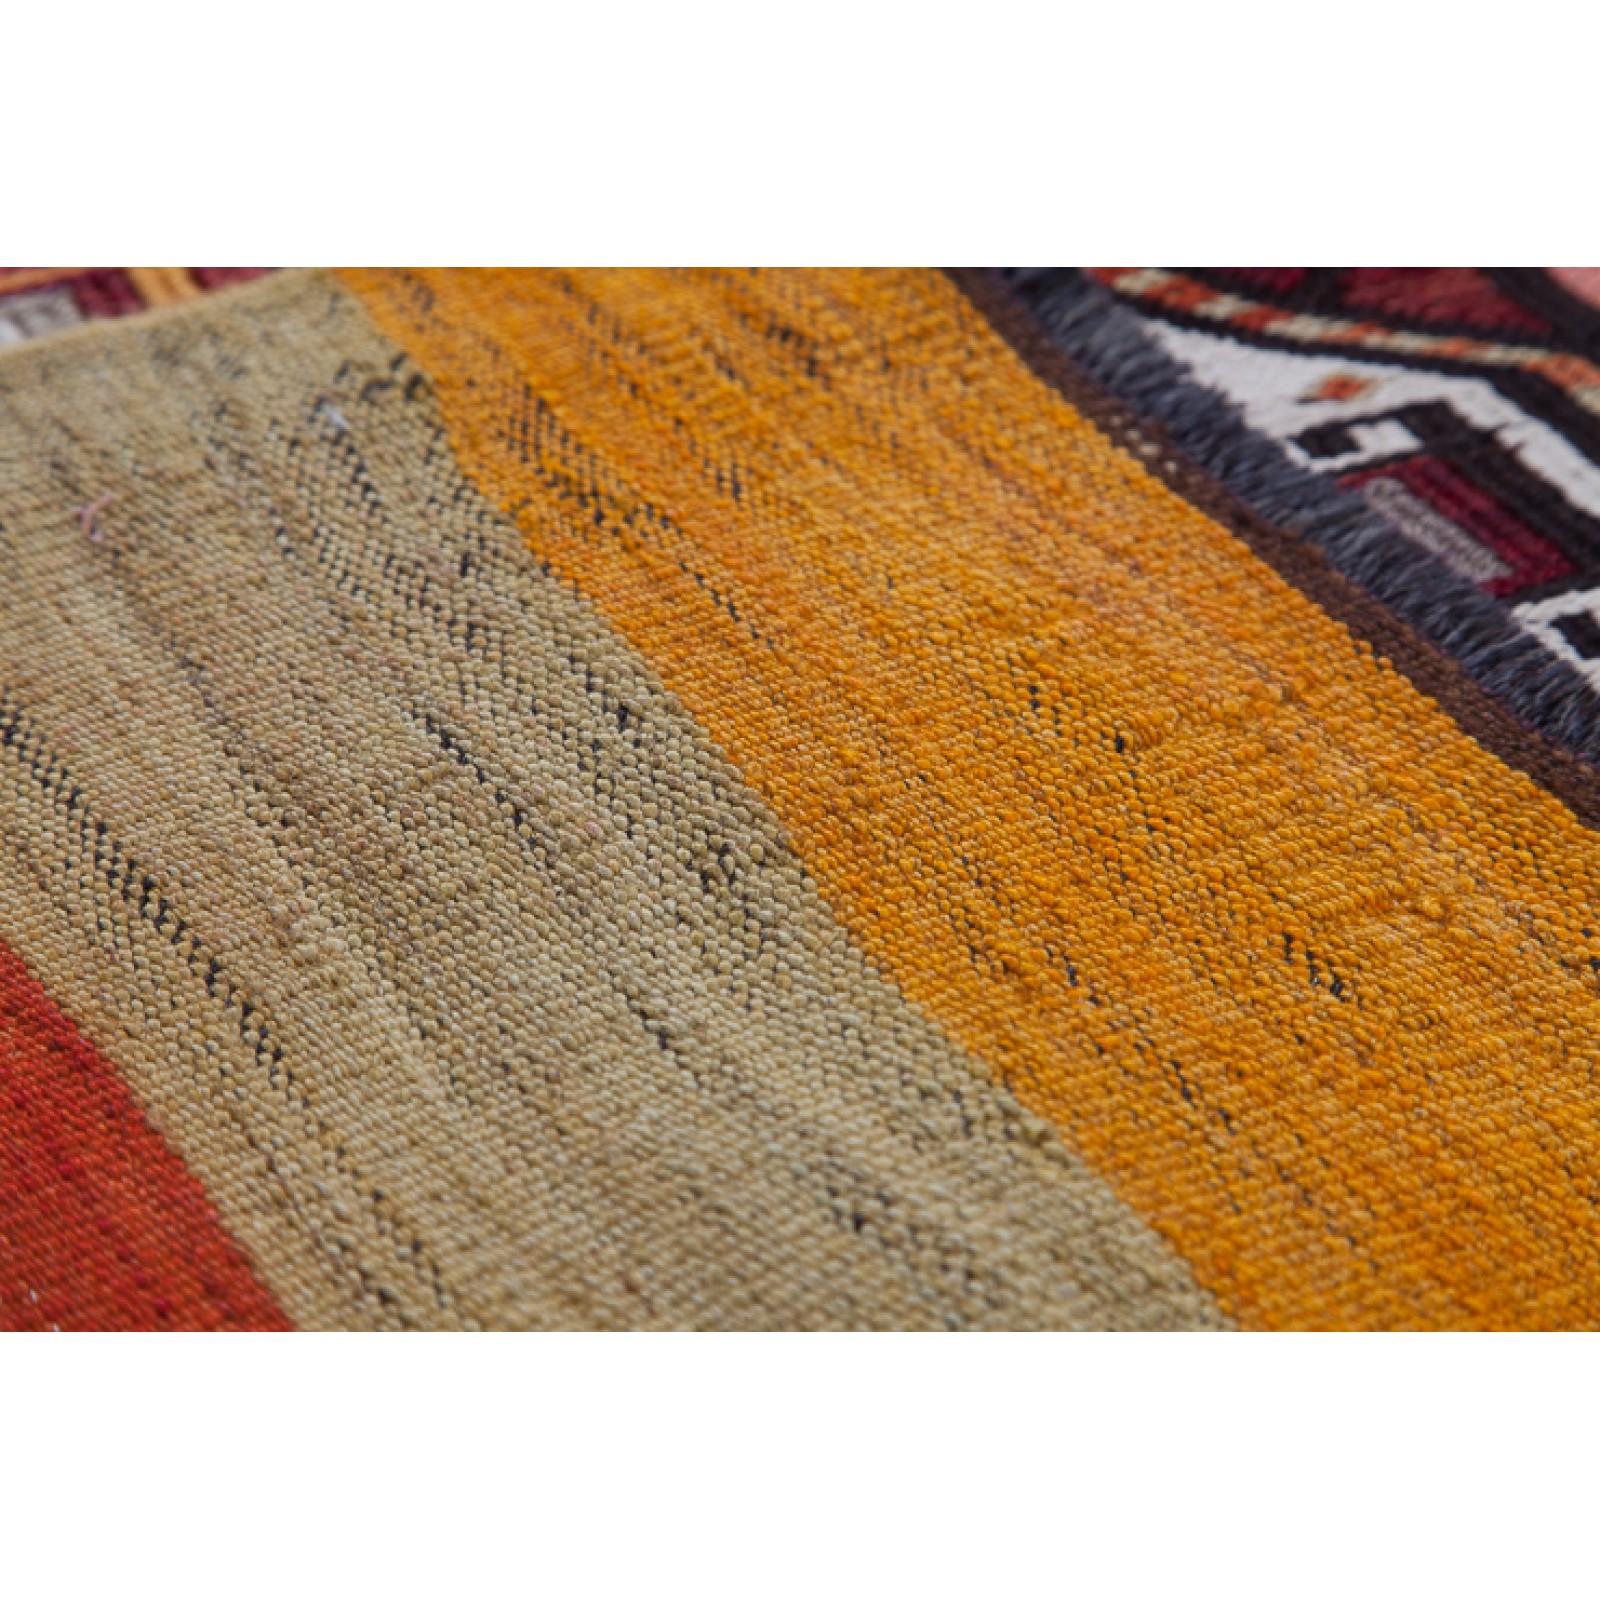 Hand-Knotted Vintage Malatya Kilim Cuval Rug Wool Goat Hair Chuval Anatolian Turkish Carpet For Sale